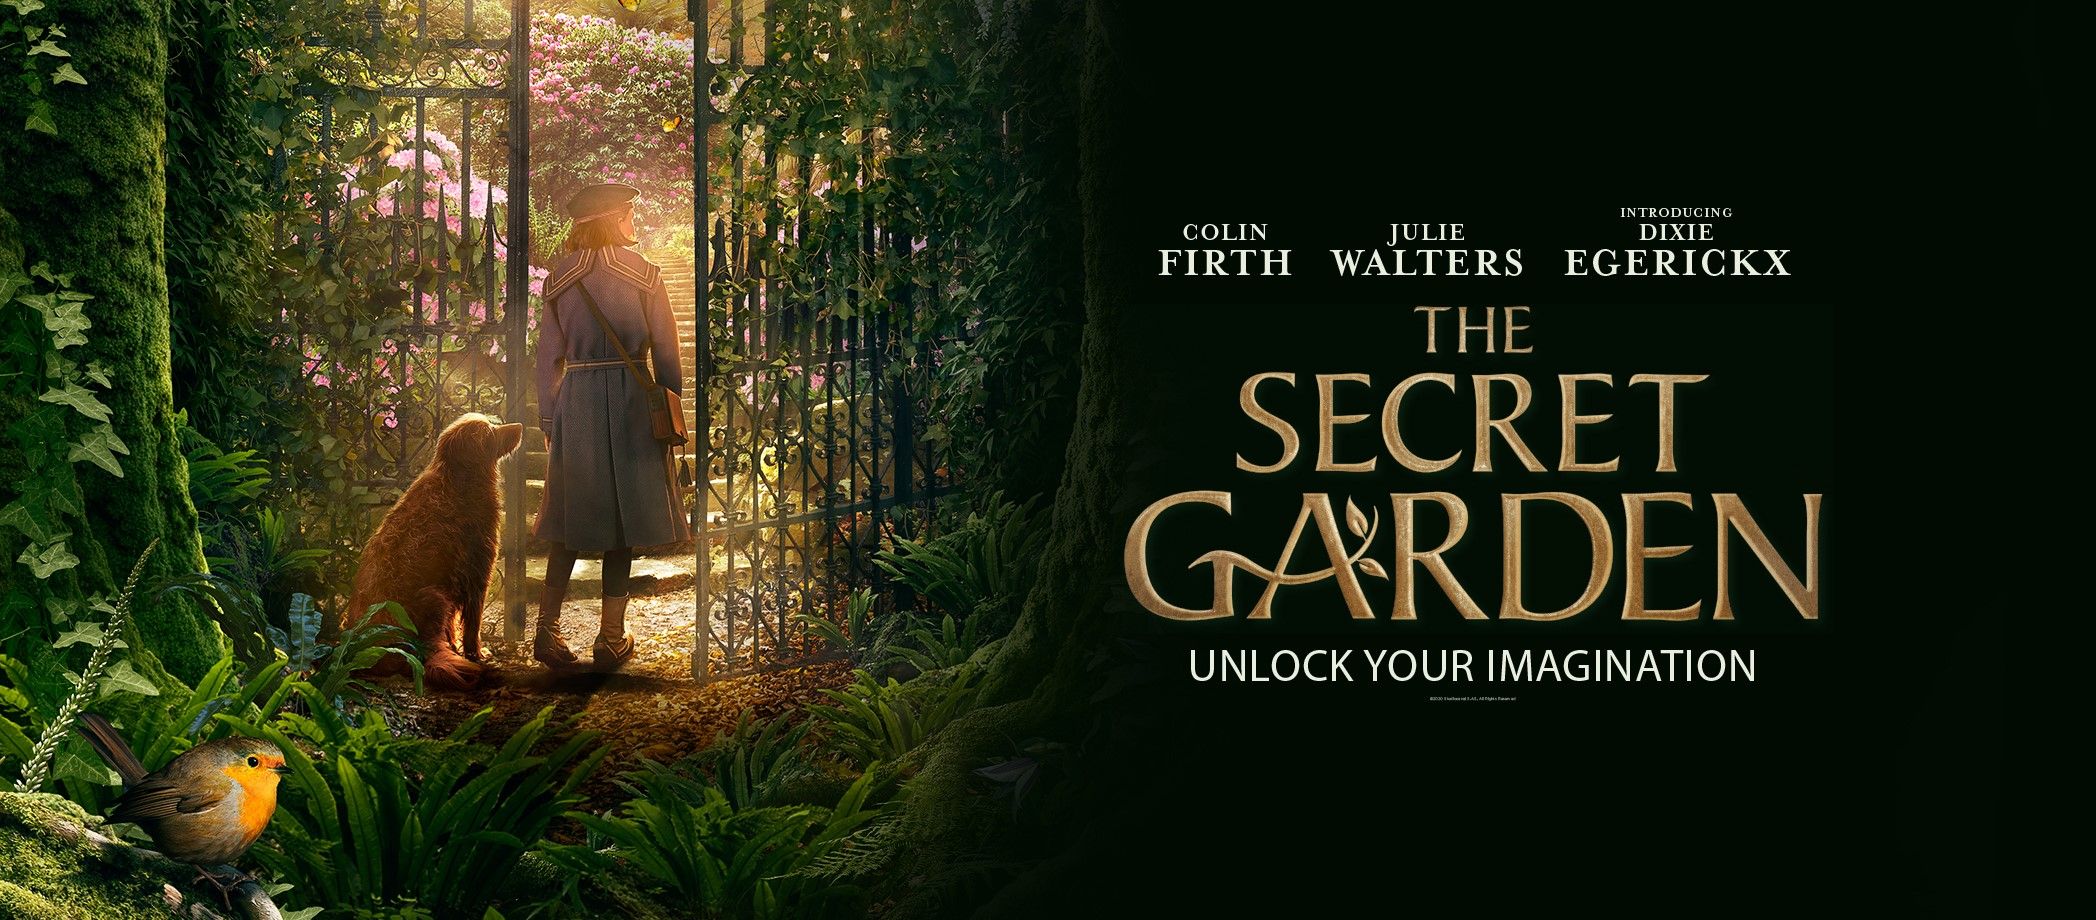 The Secret Garden Trailer: New Adaptation starring Colin Firth